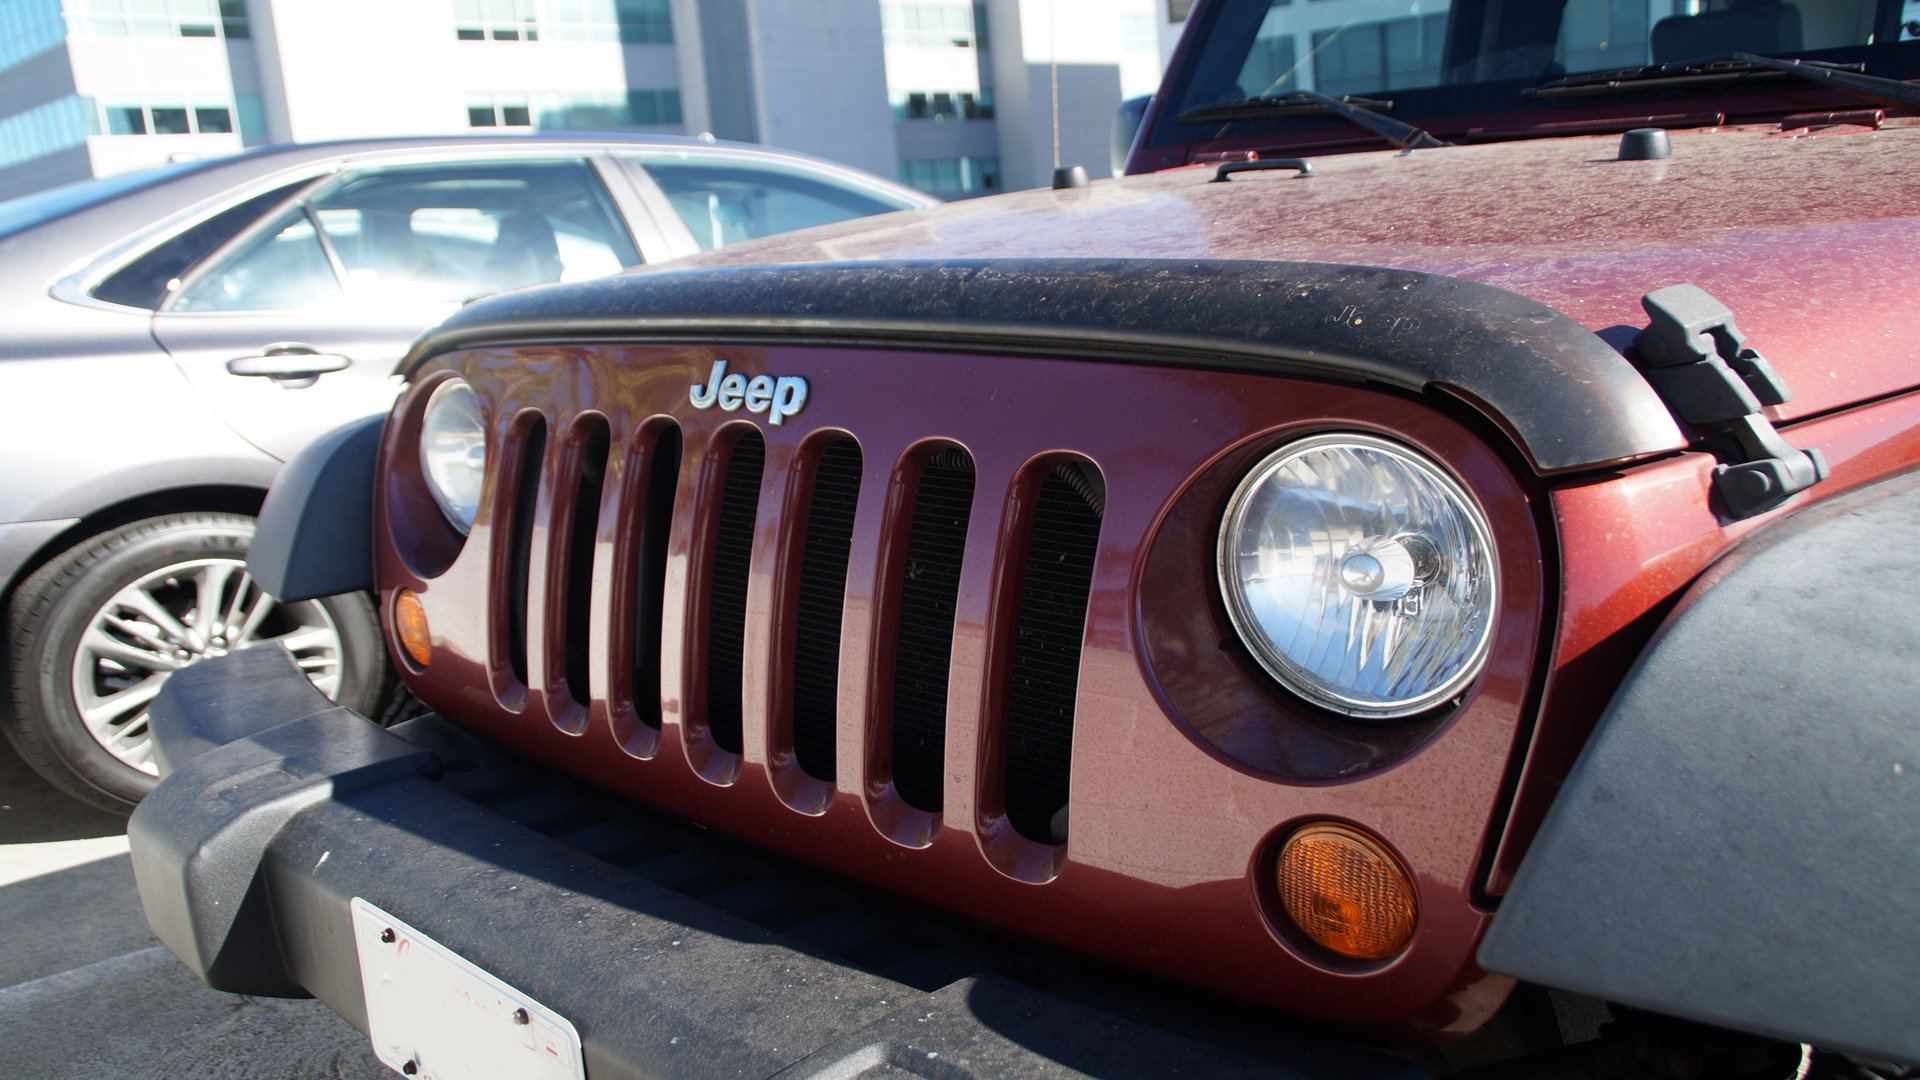 Jeep Wrangler JK: How to Replace Headlights | Jk-forum